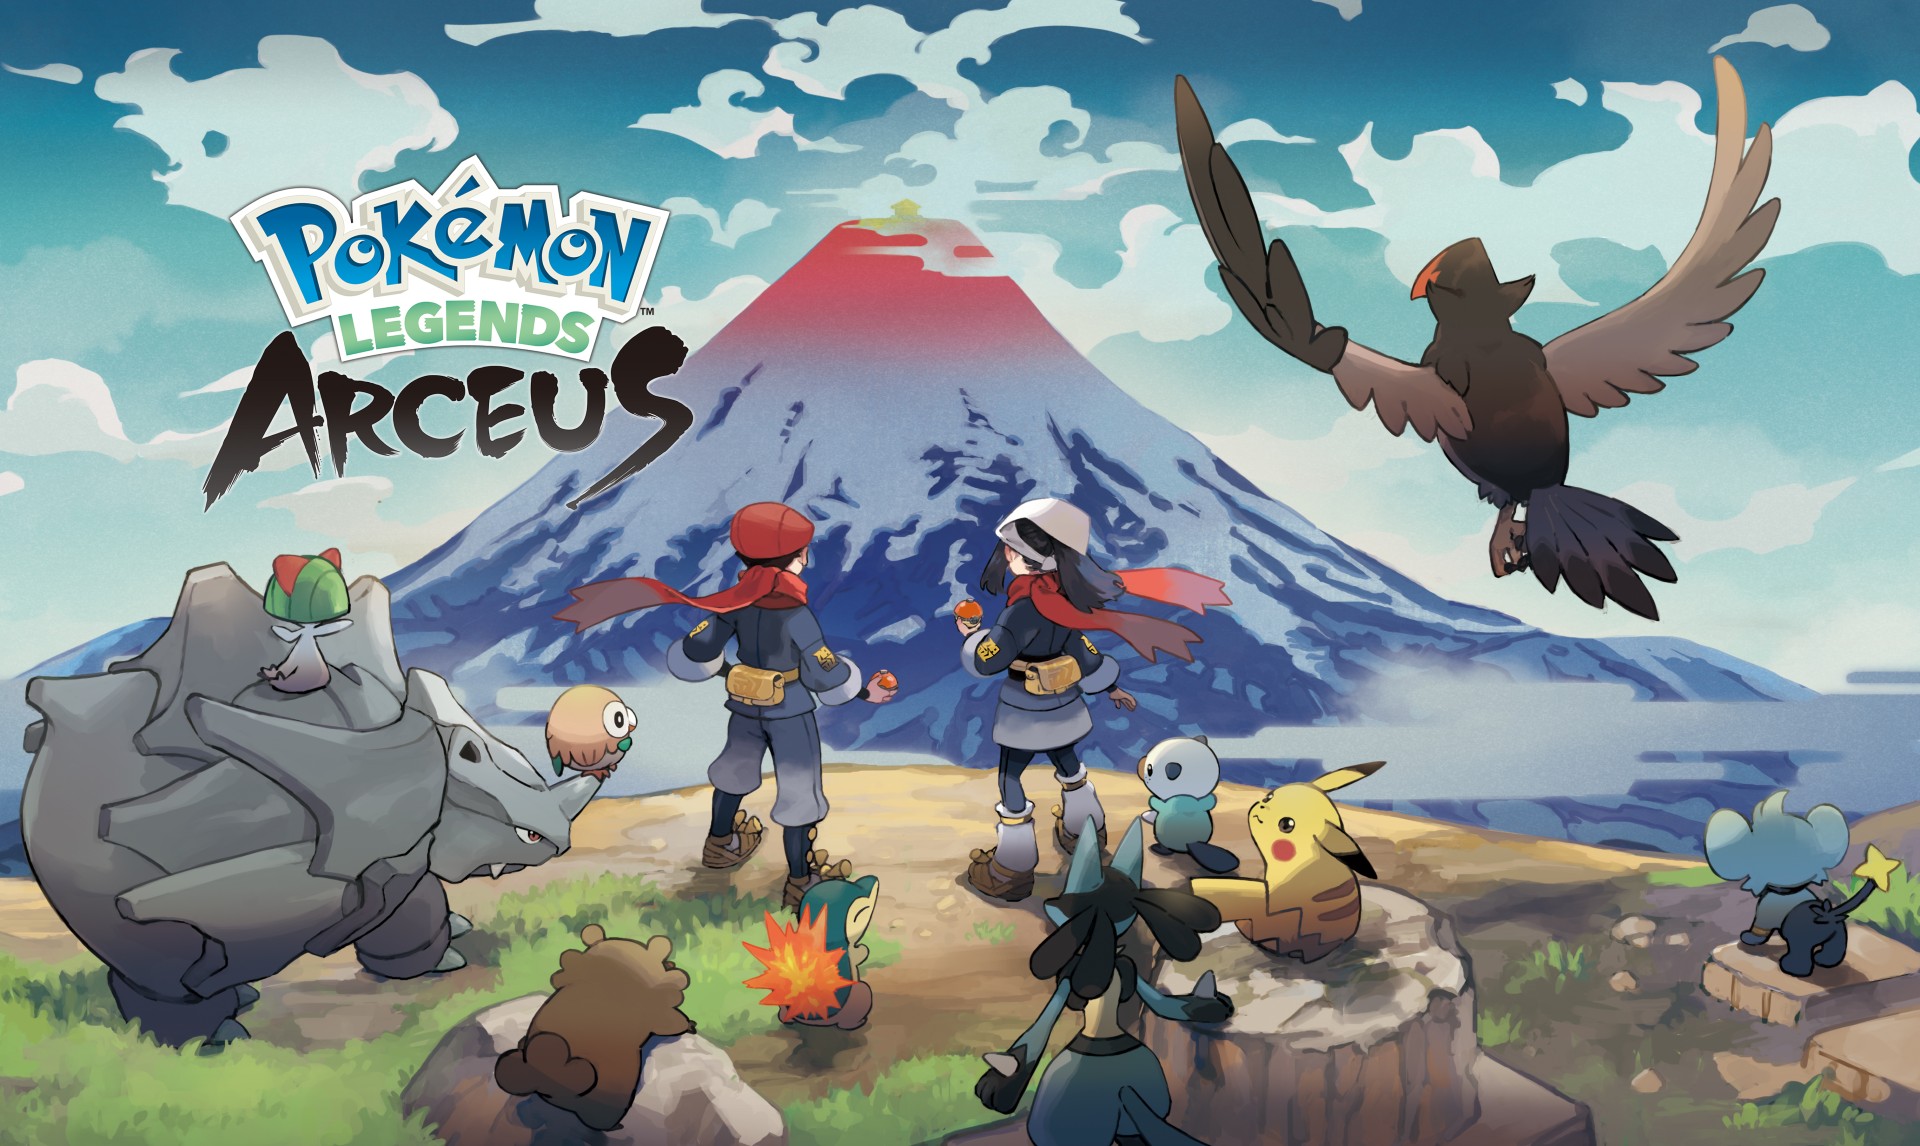 Pokemon Legends: Arceus ประกาศวันวางจำหน่าย เจอกันต้นปี 2022